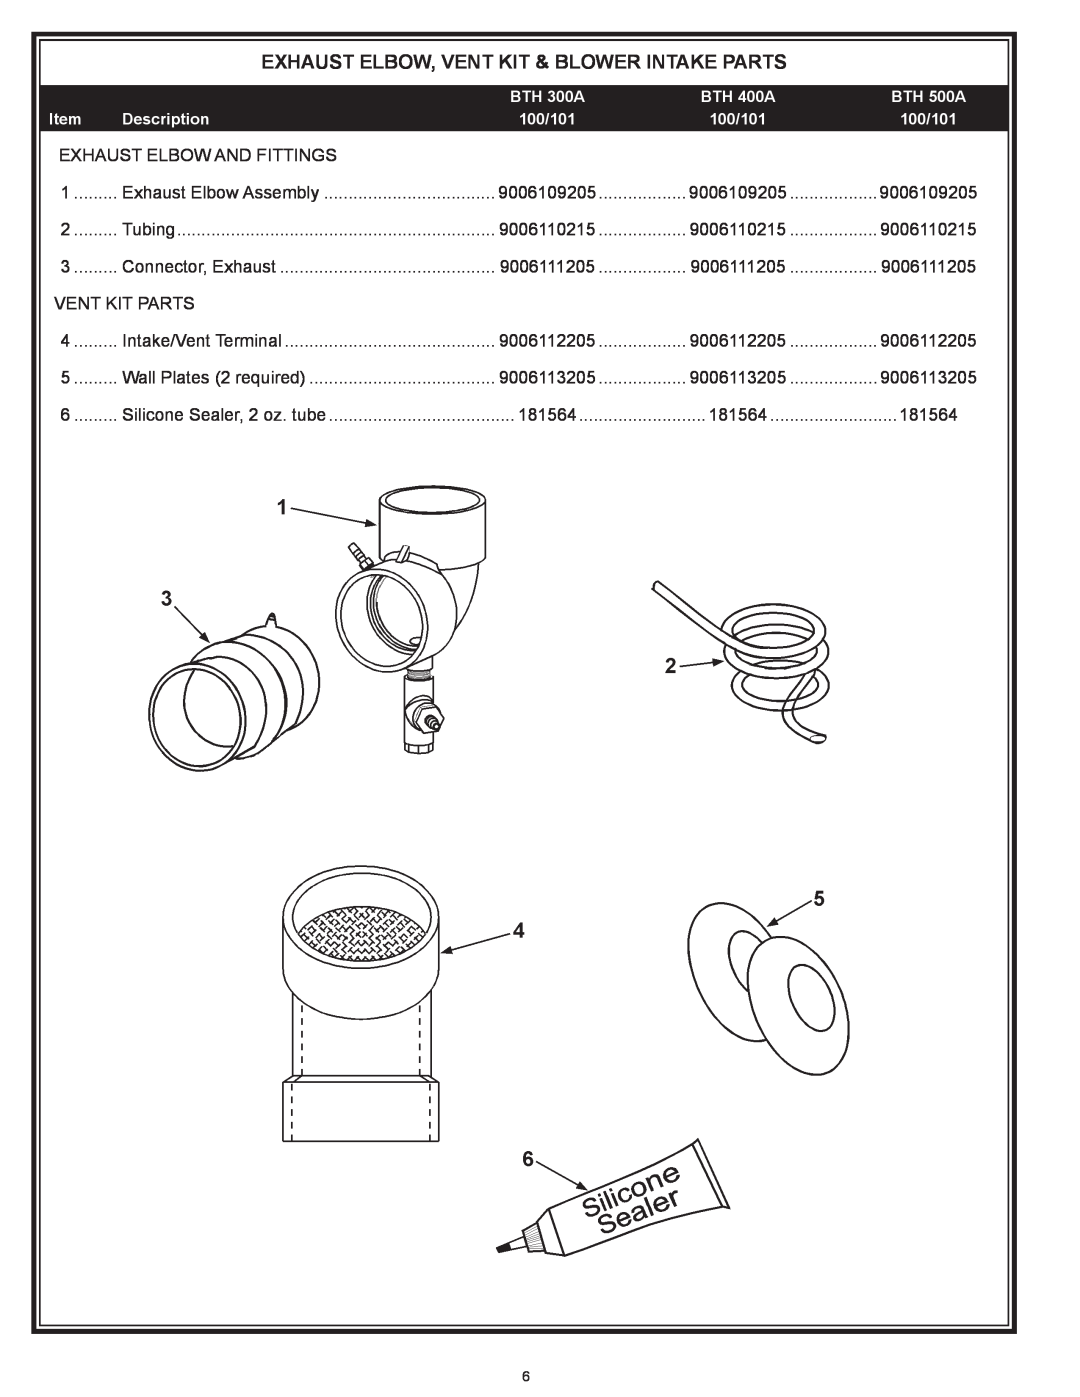 A.O. Smith BTH-500A Exhaust Elbow, Vent Kit & Blower Intake Parts, BTH 300A, BTH 400A, BTH 500A, Description, 100/101 